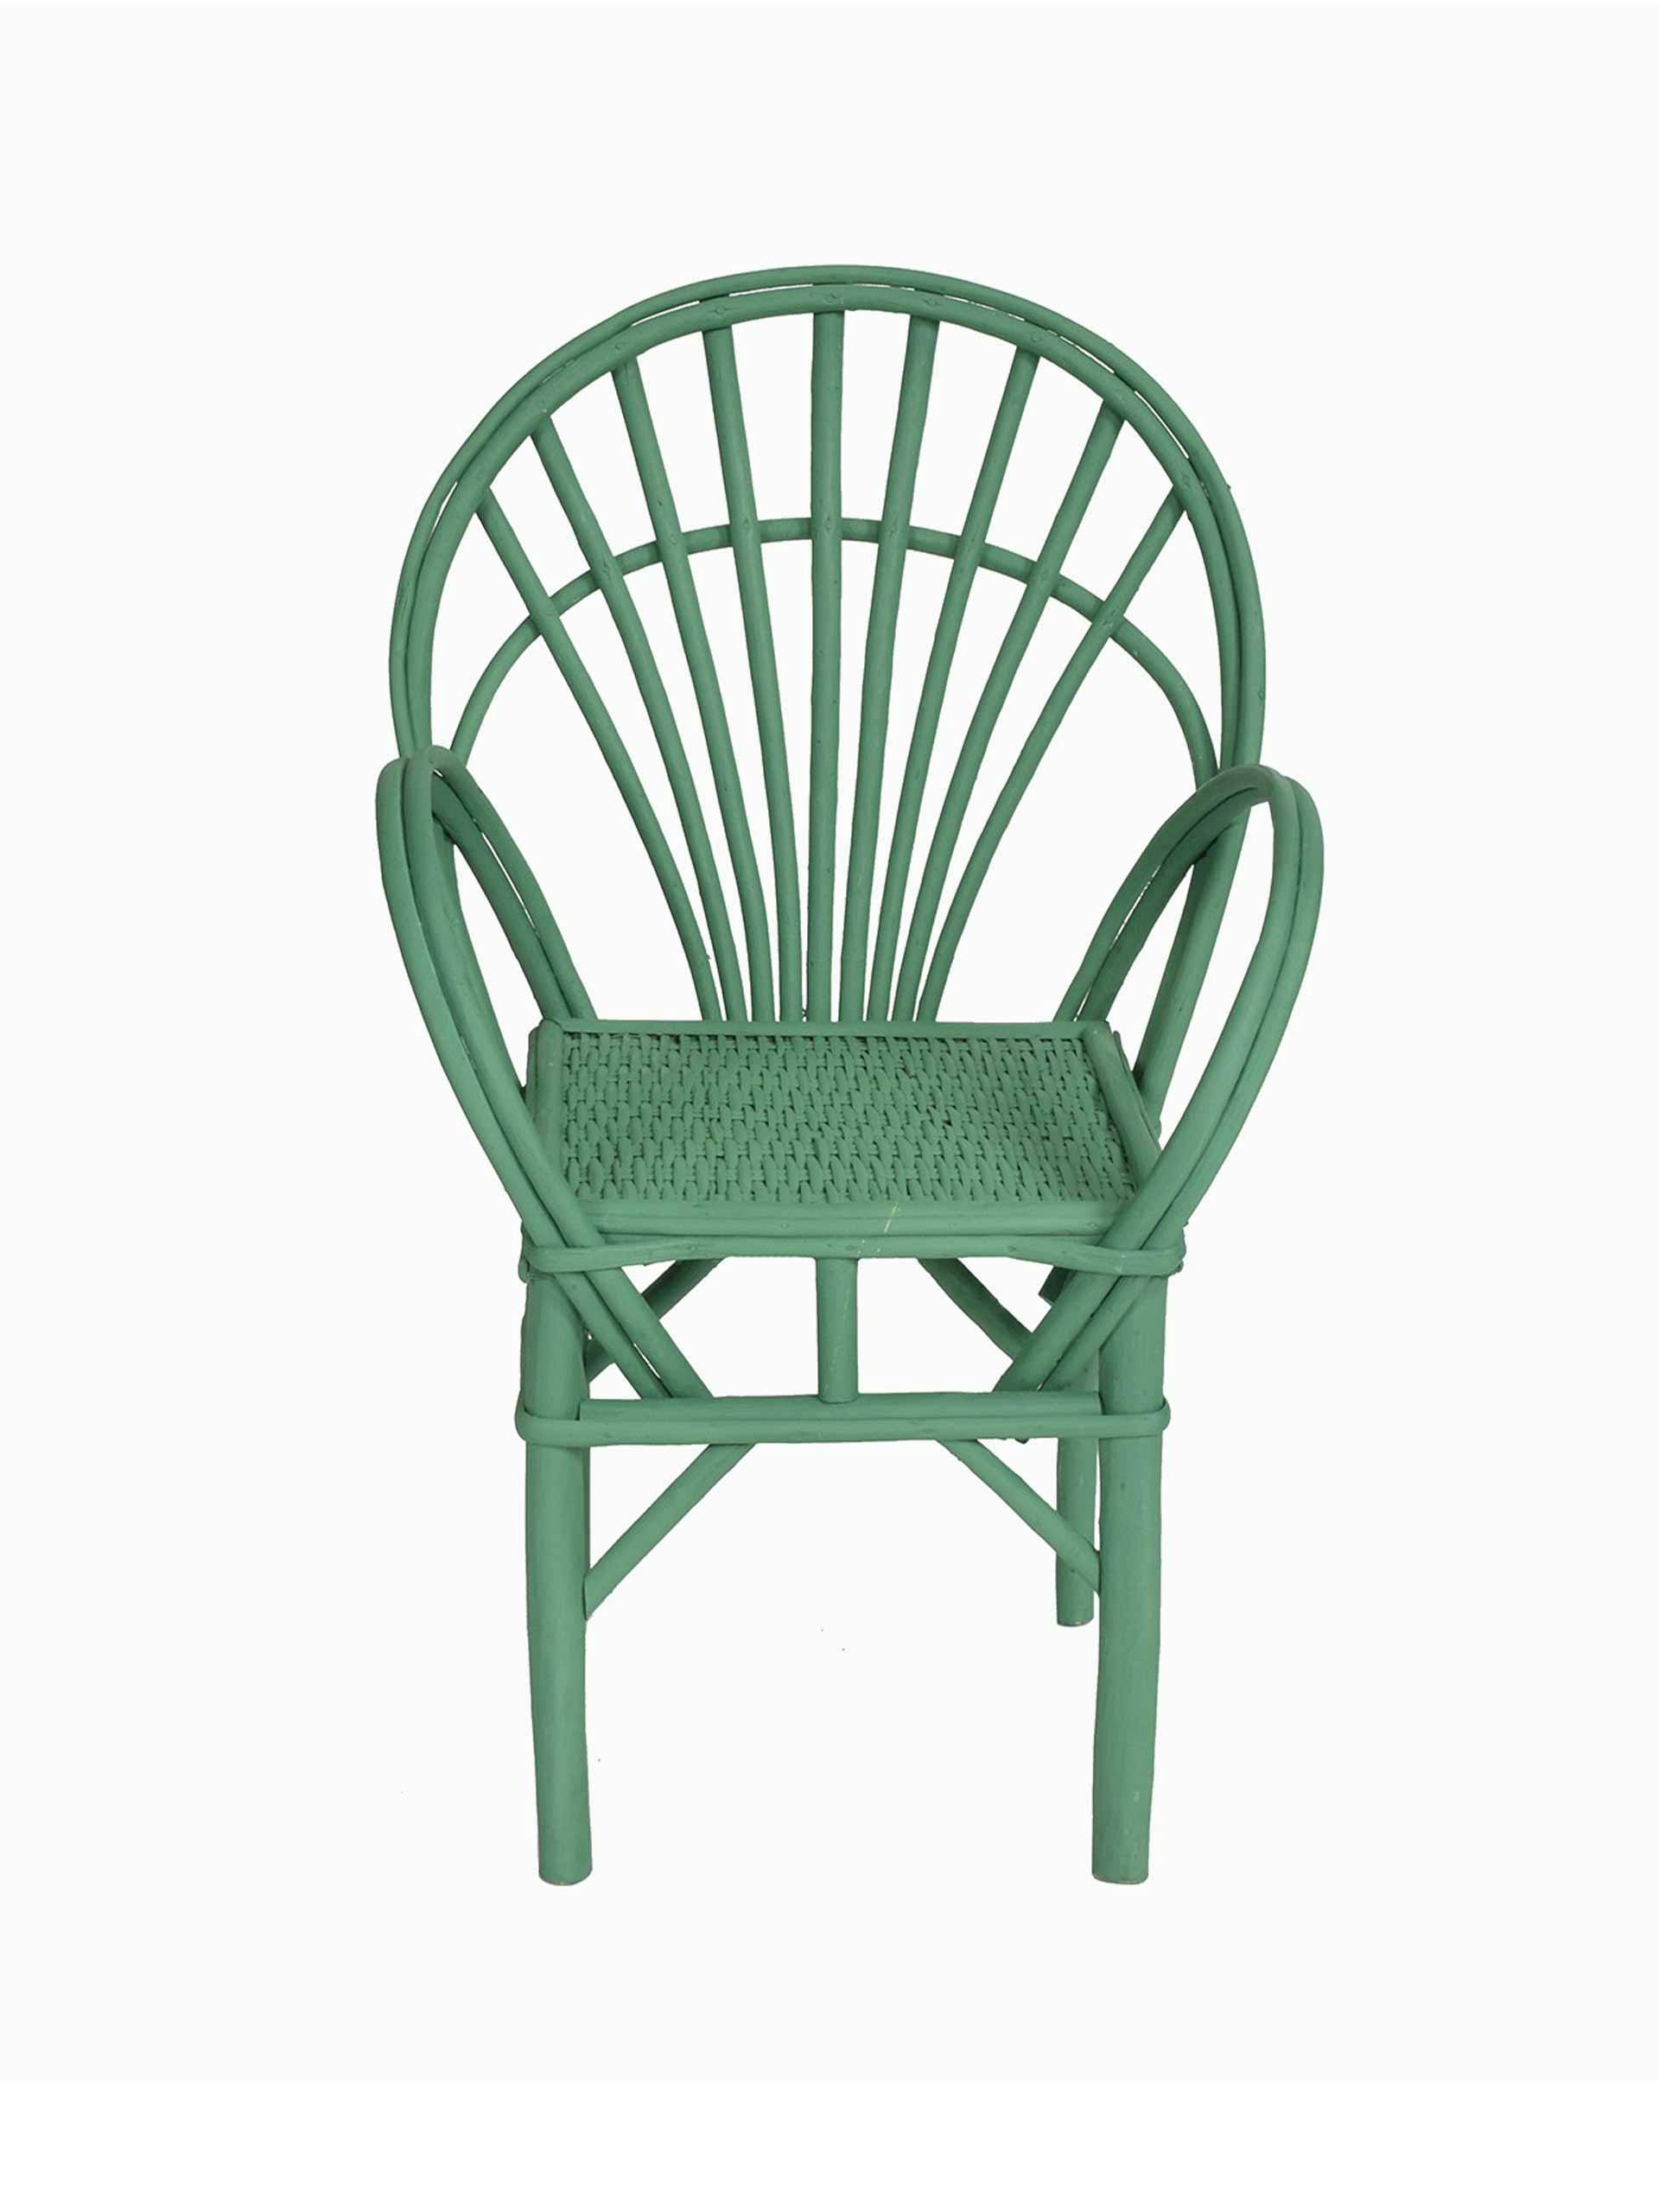 Green rattan chair